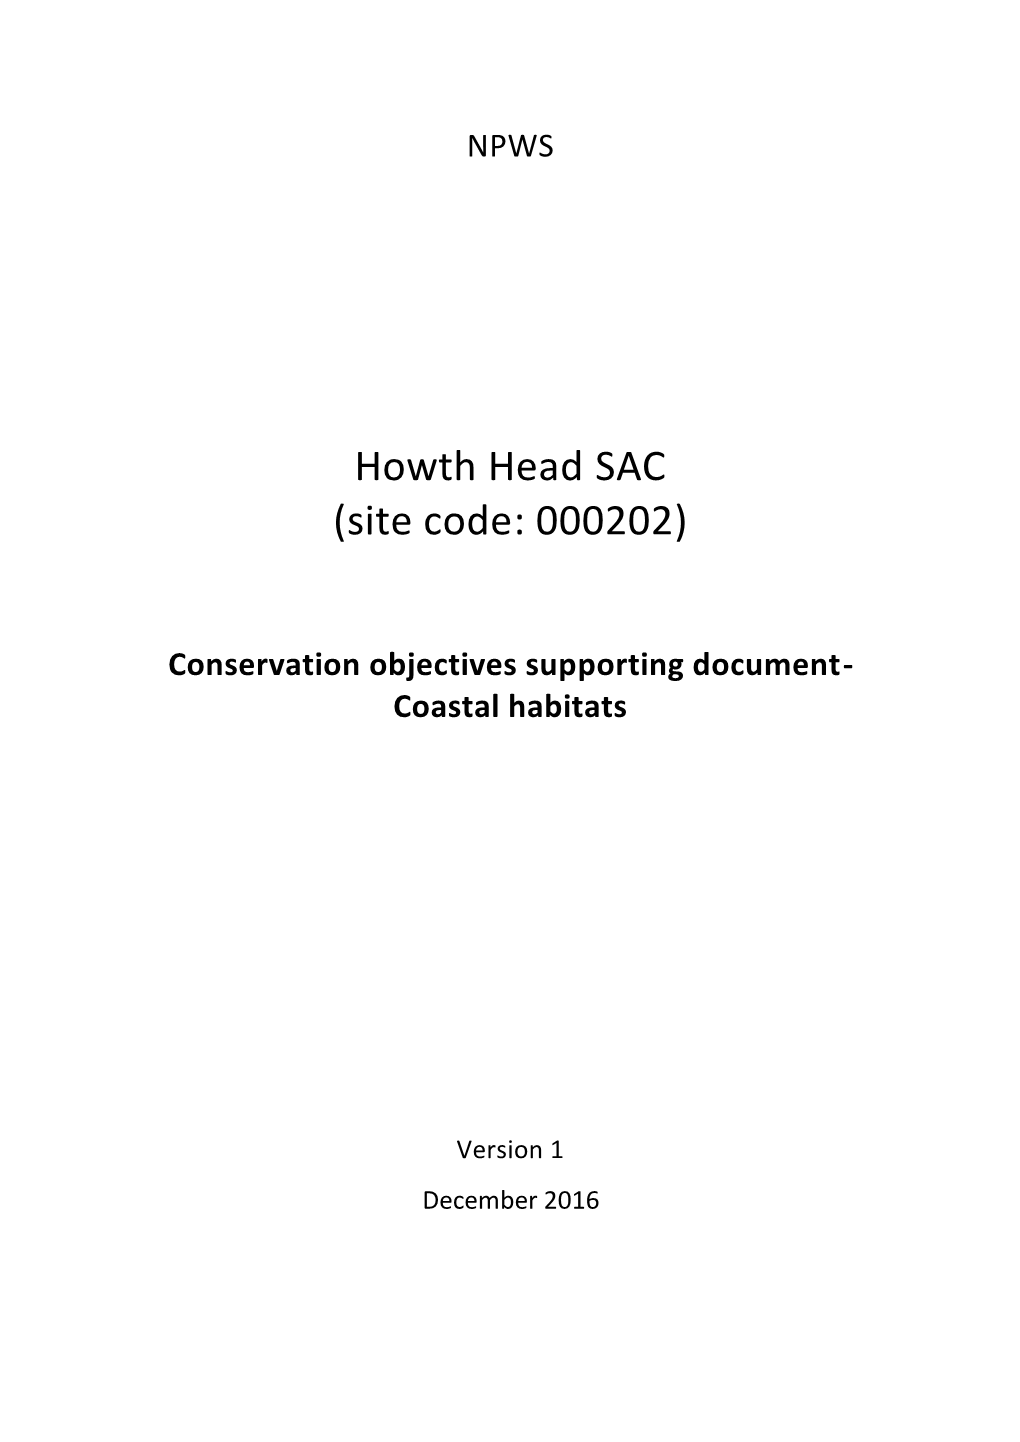 Howth Head SAC (Site Code: 000202)